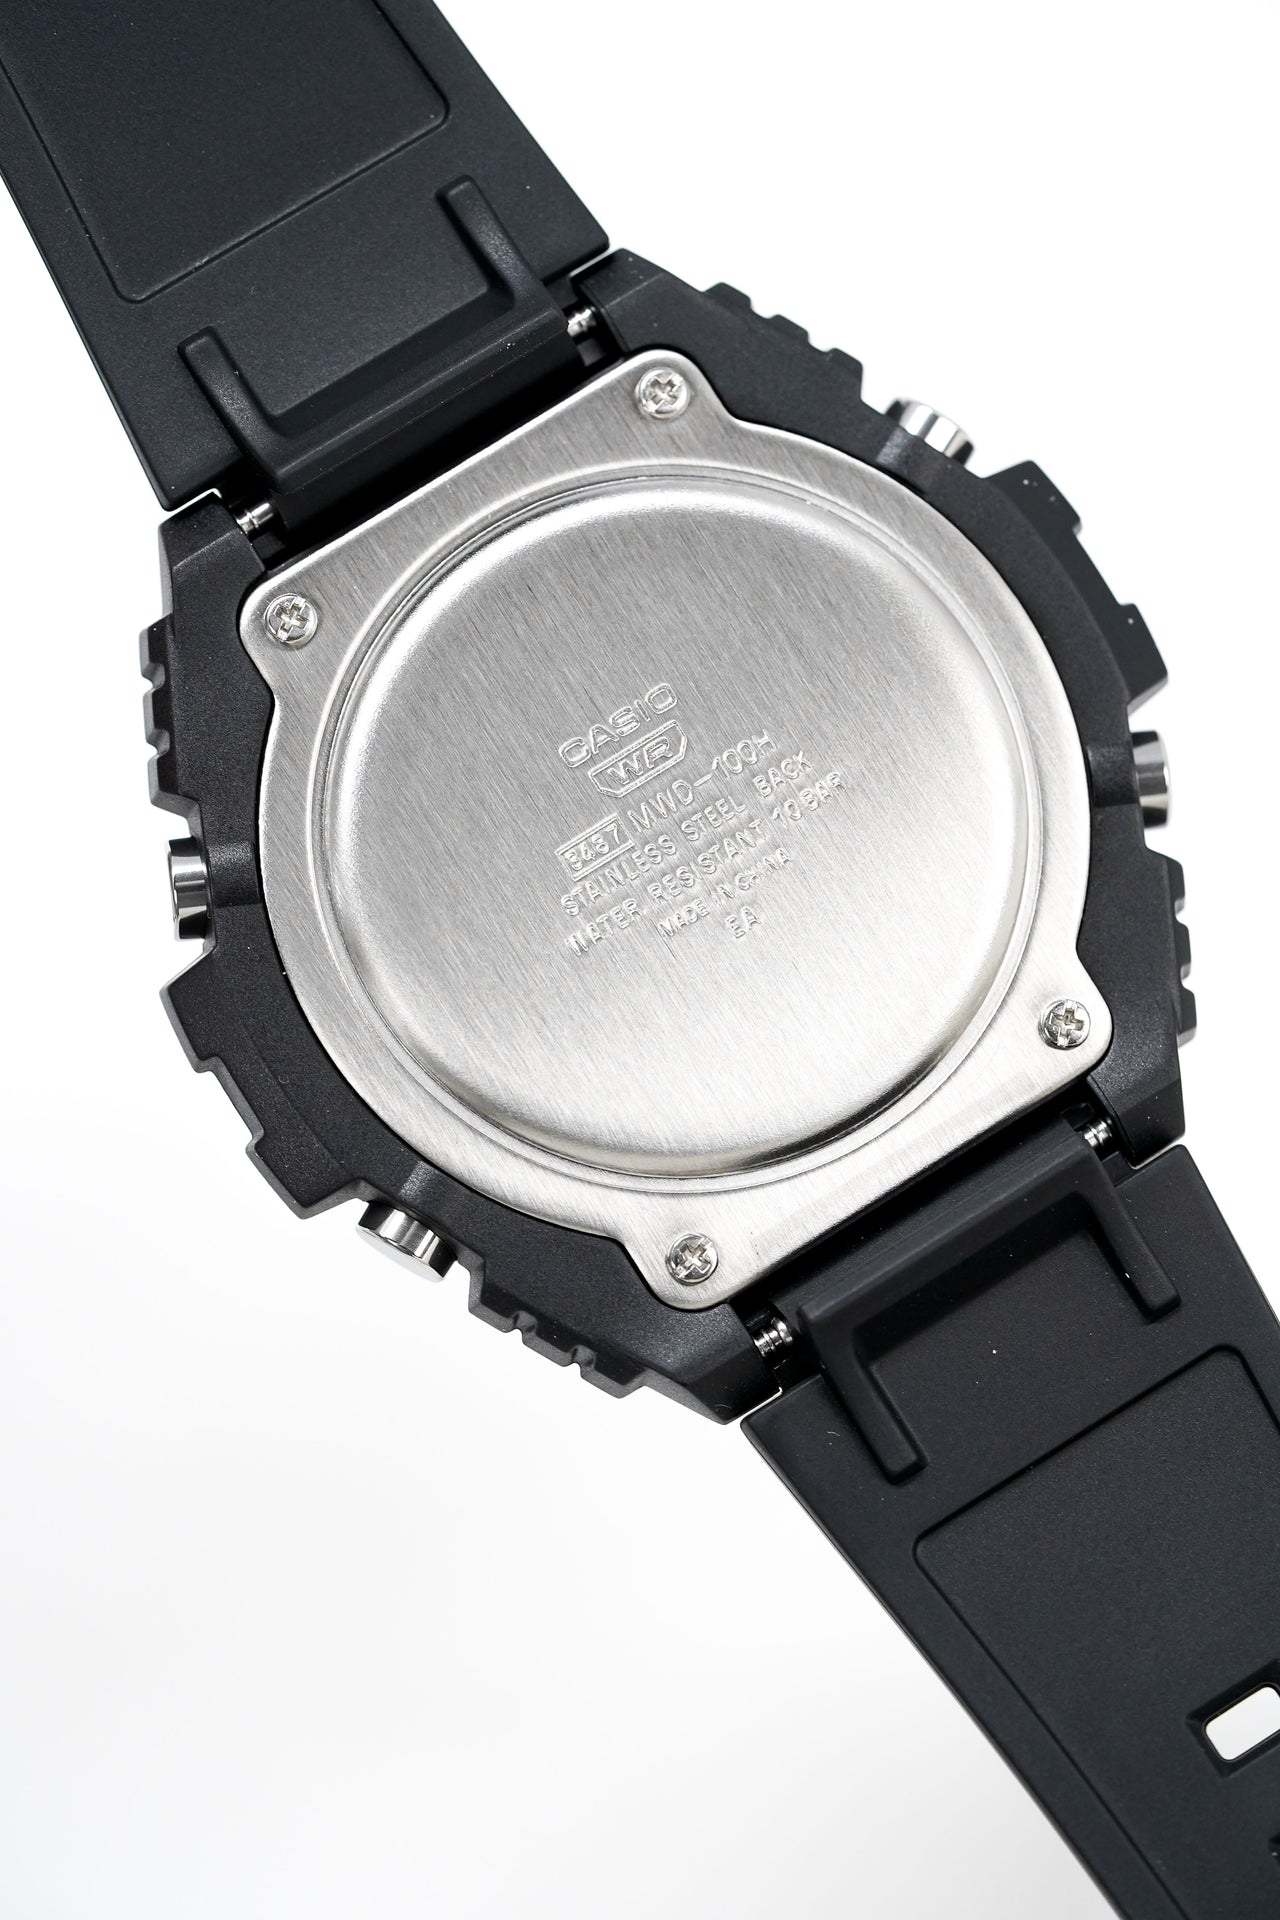 Casio Men's Watch Digital  Illuminator WR100M Black C